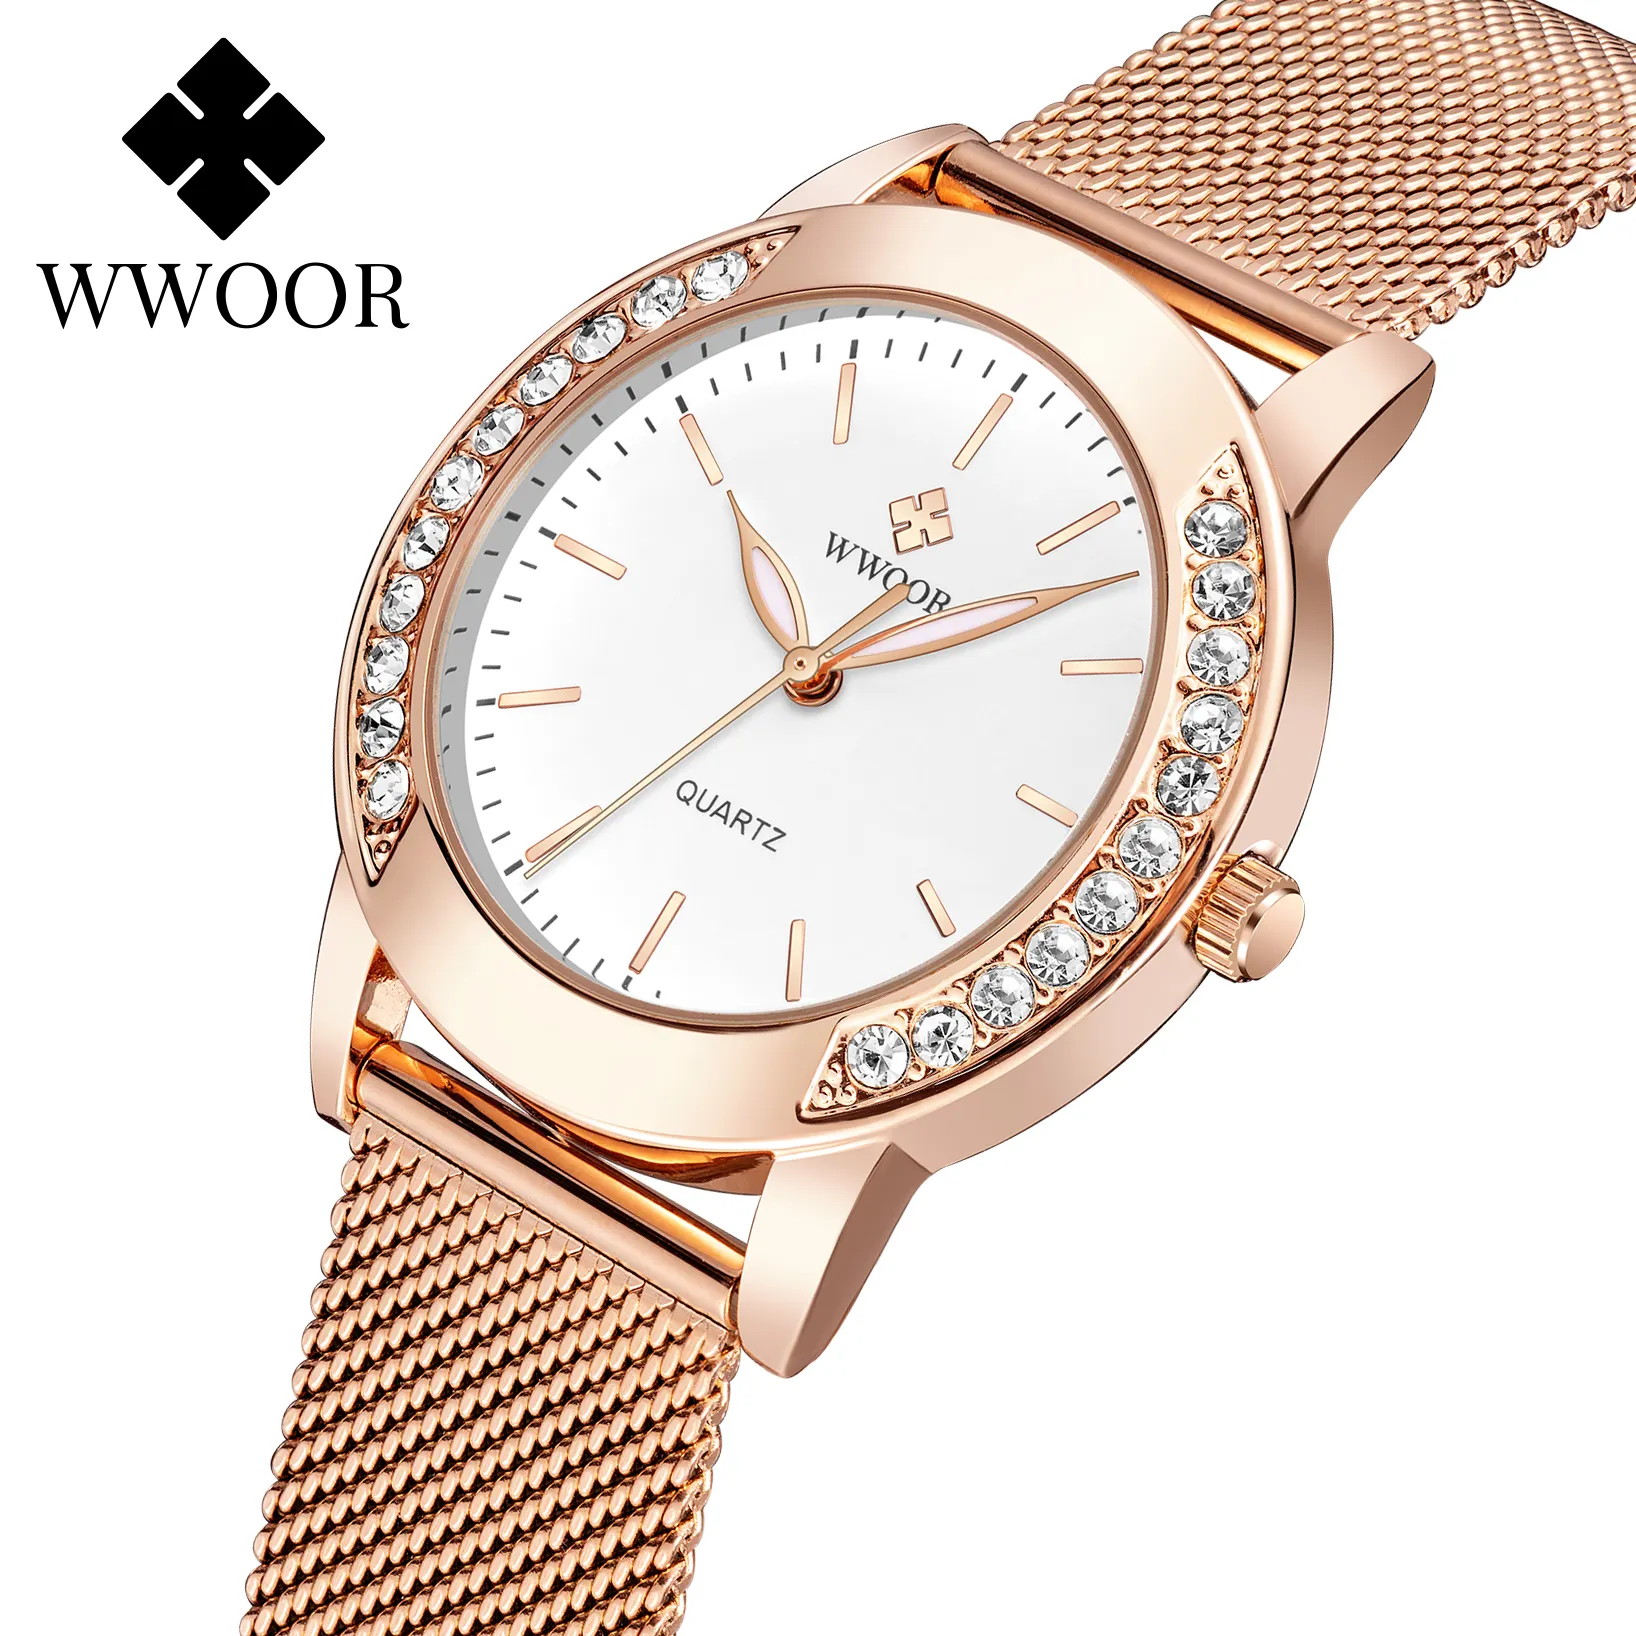 WWOOR 8877 fashion rose gold womens digital watch stylish Mesh Strap Waterproof superior ultra slim Leisure watch kit